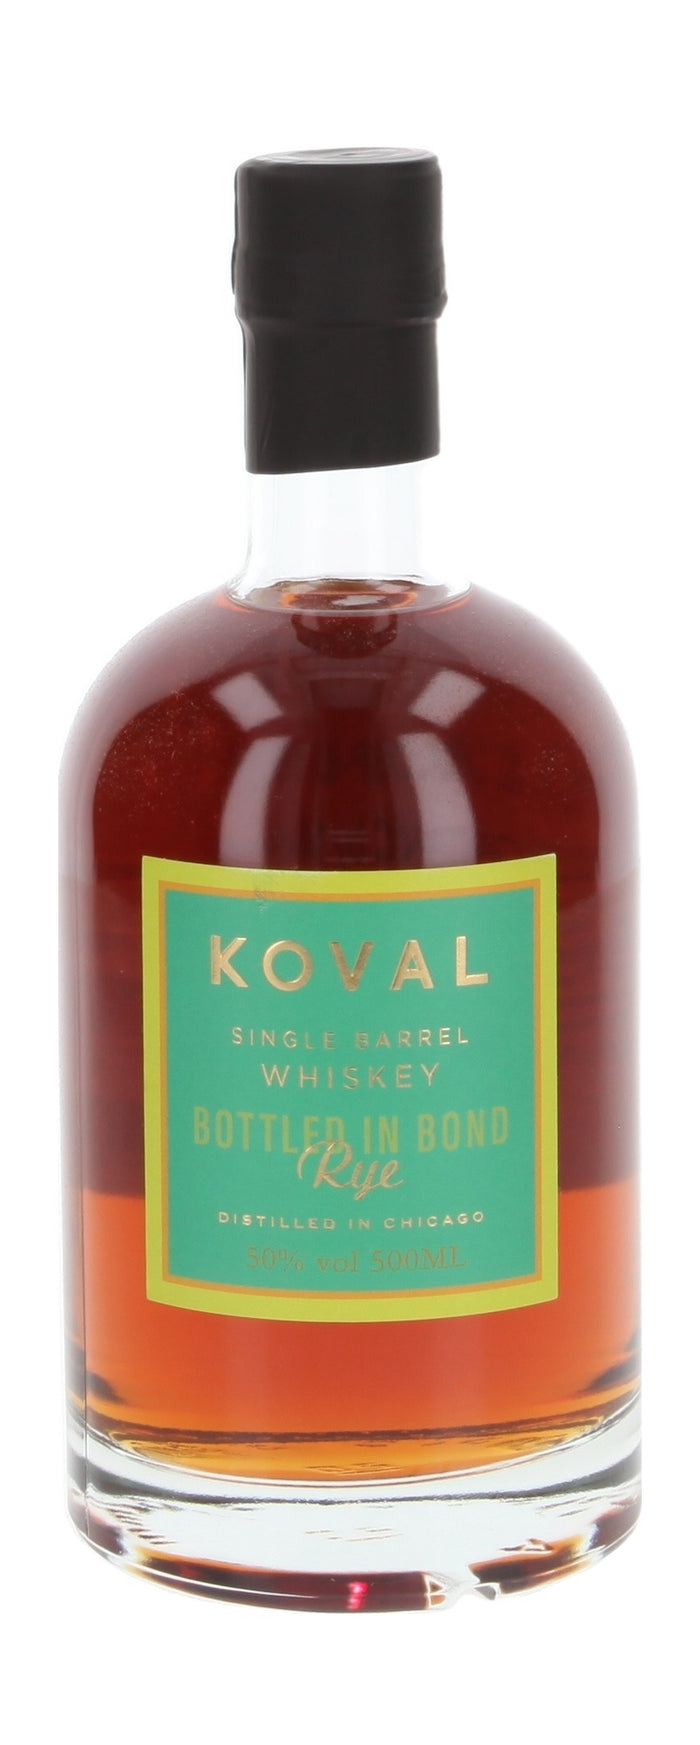 Koval Rye Bottled in Bond Single Barrel Whiskey